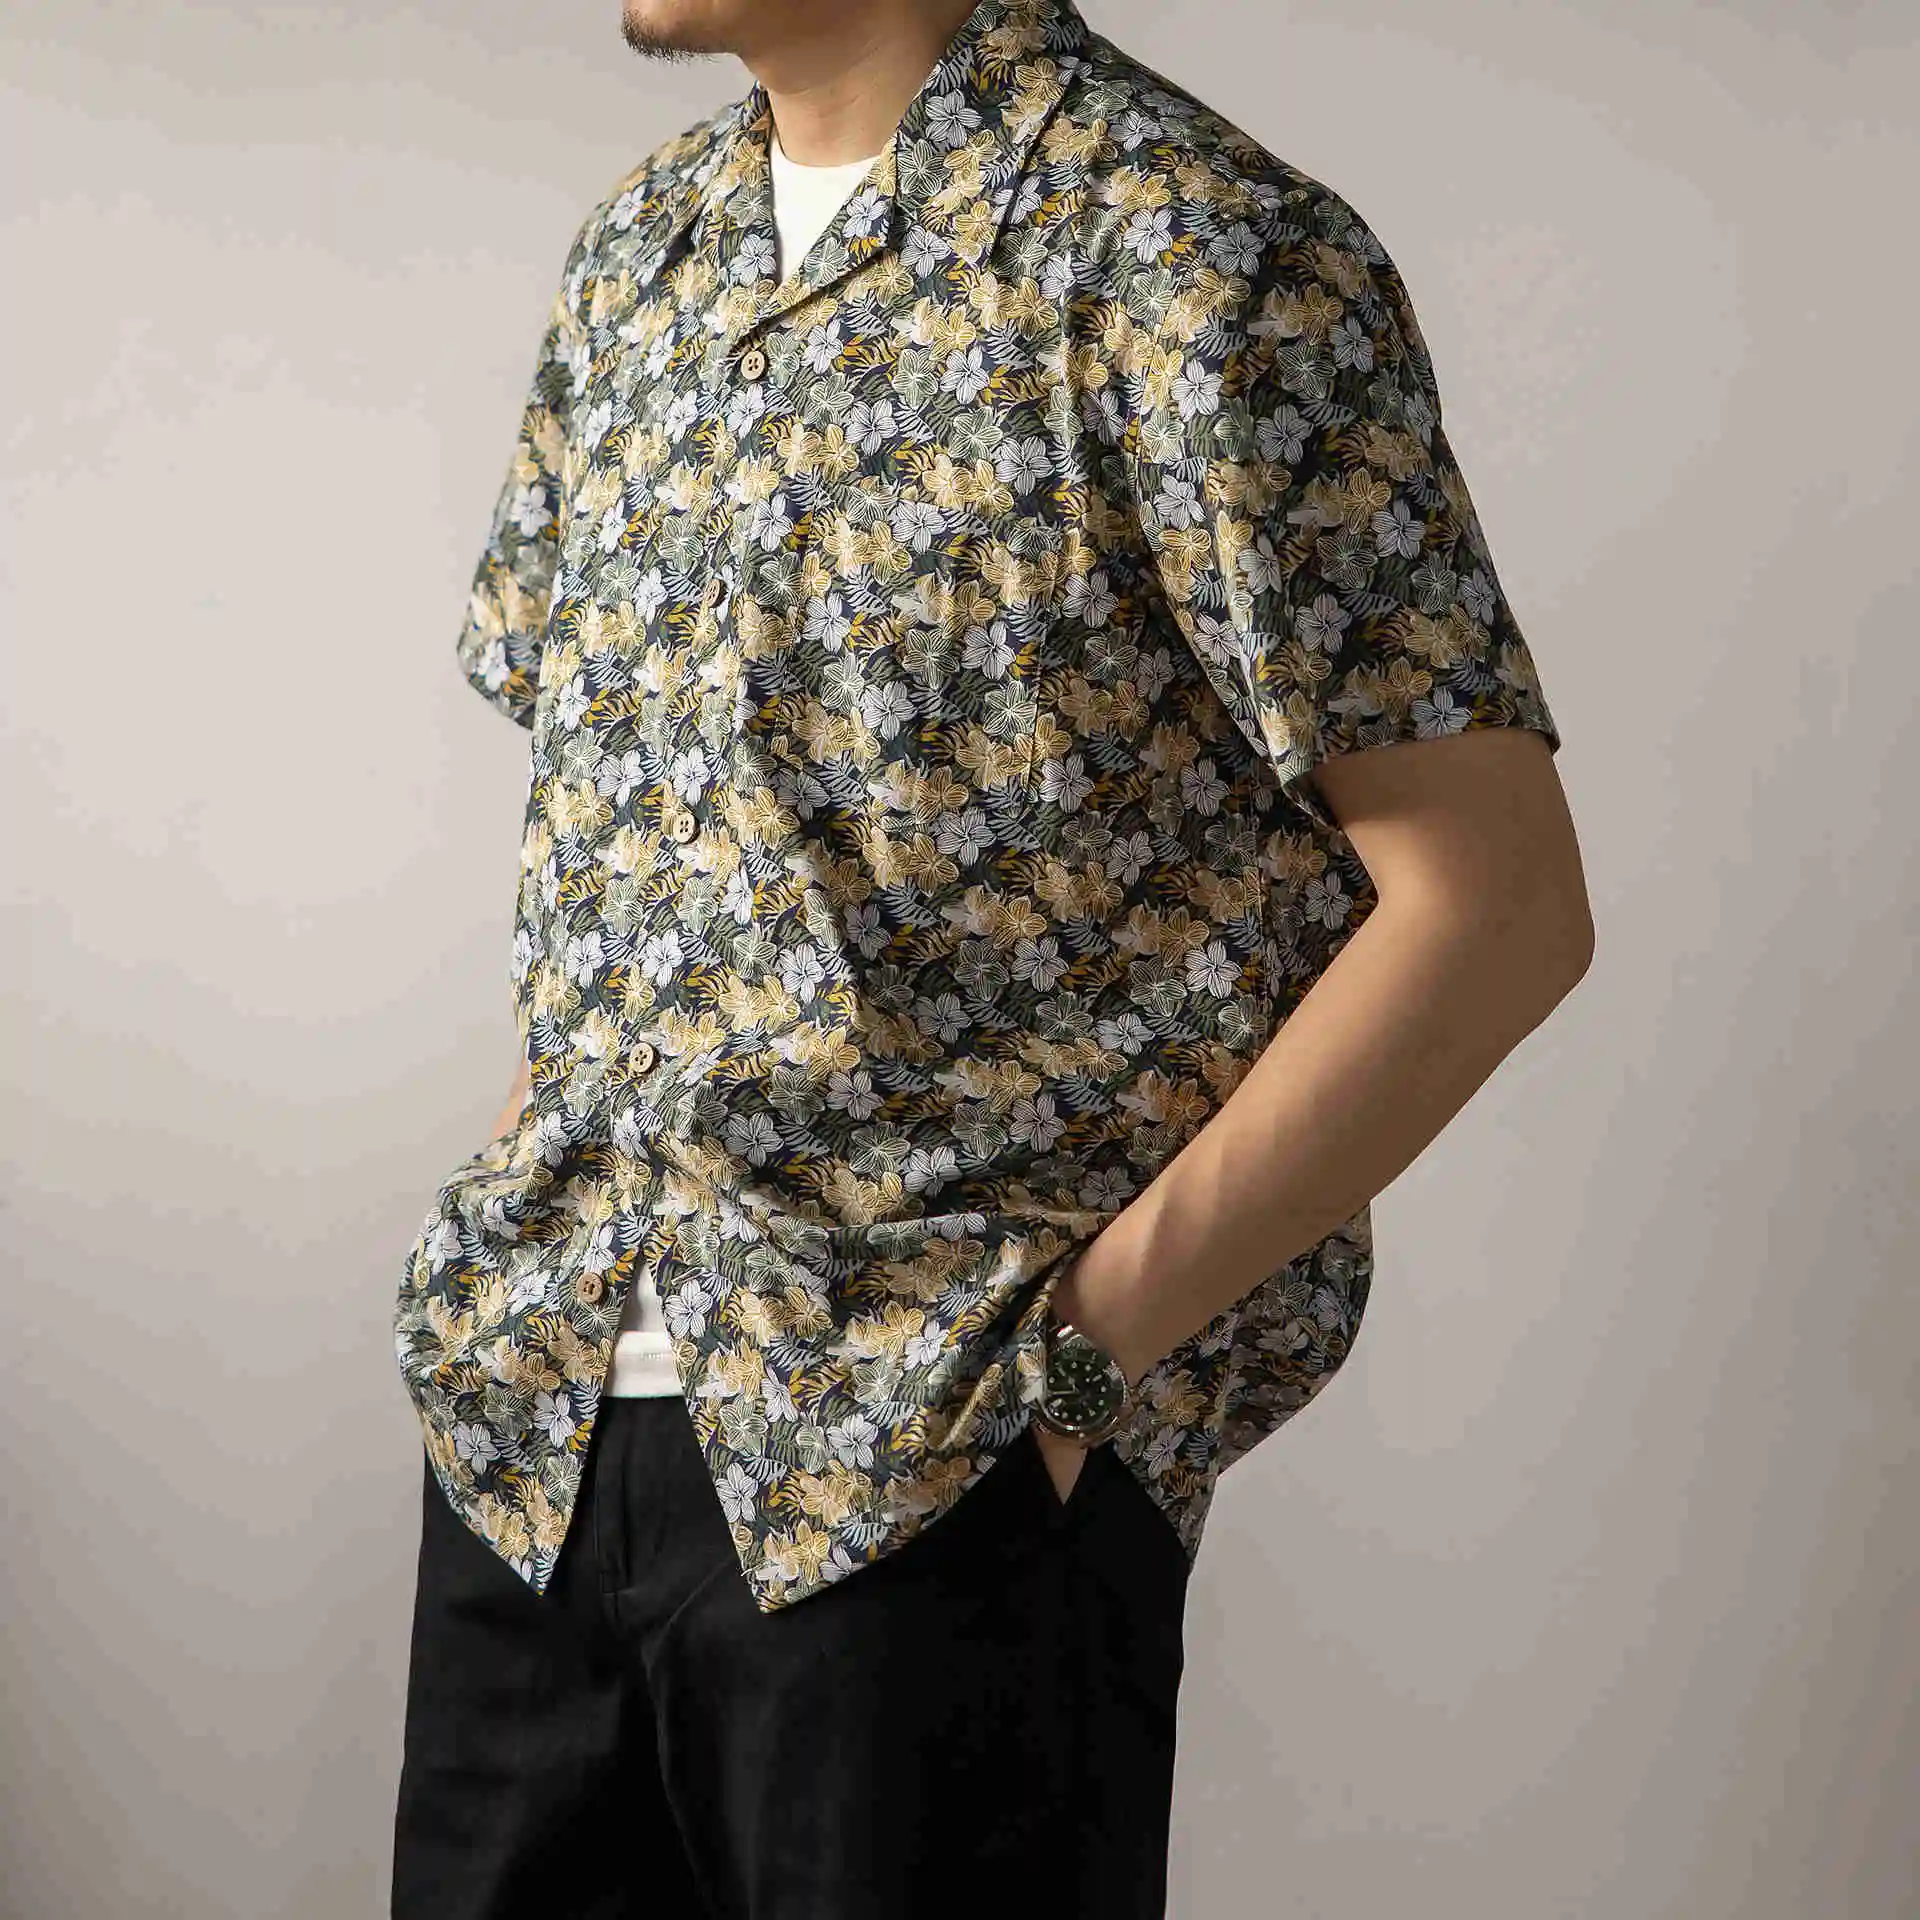 HW-0011 Big US Size Genuine Quality Vintage Looking Loose Fitting Hawaii Aloha Cotton Printing Shirt